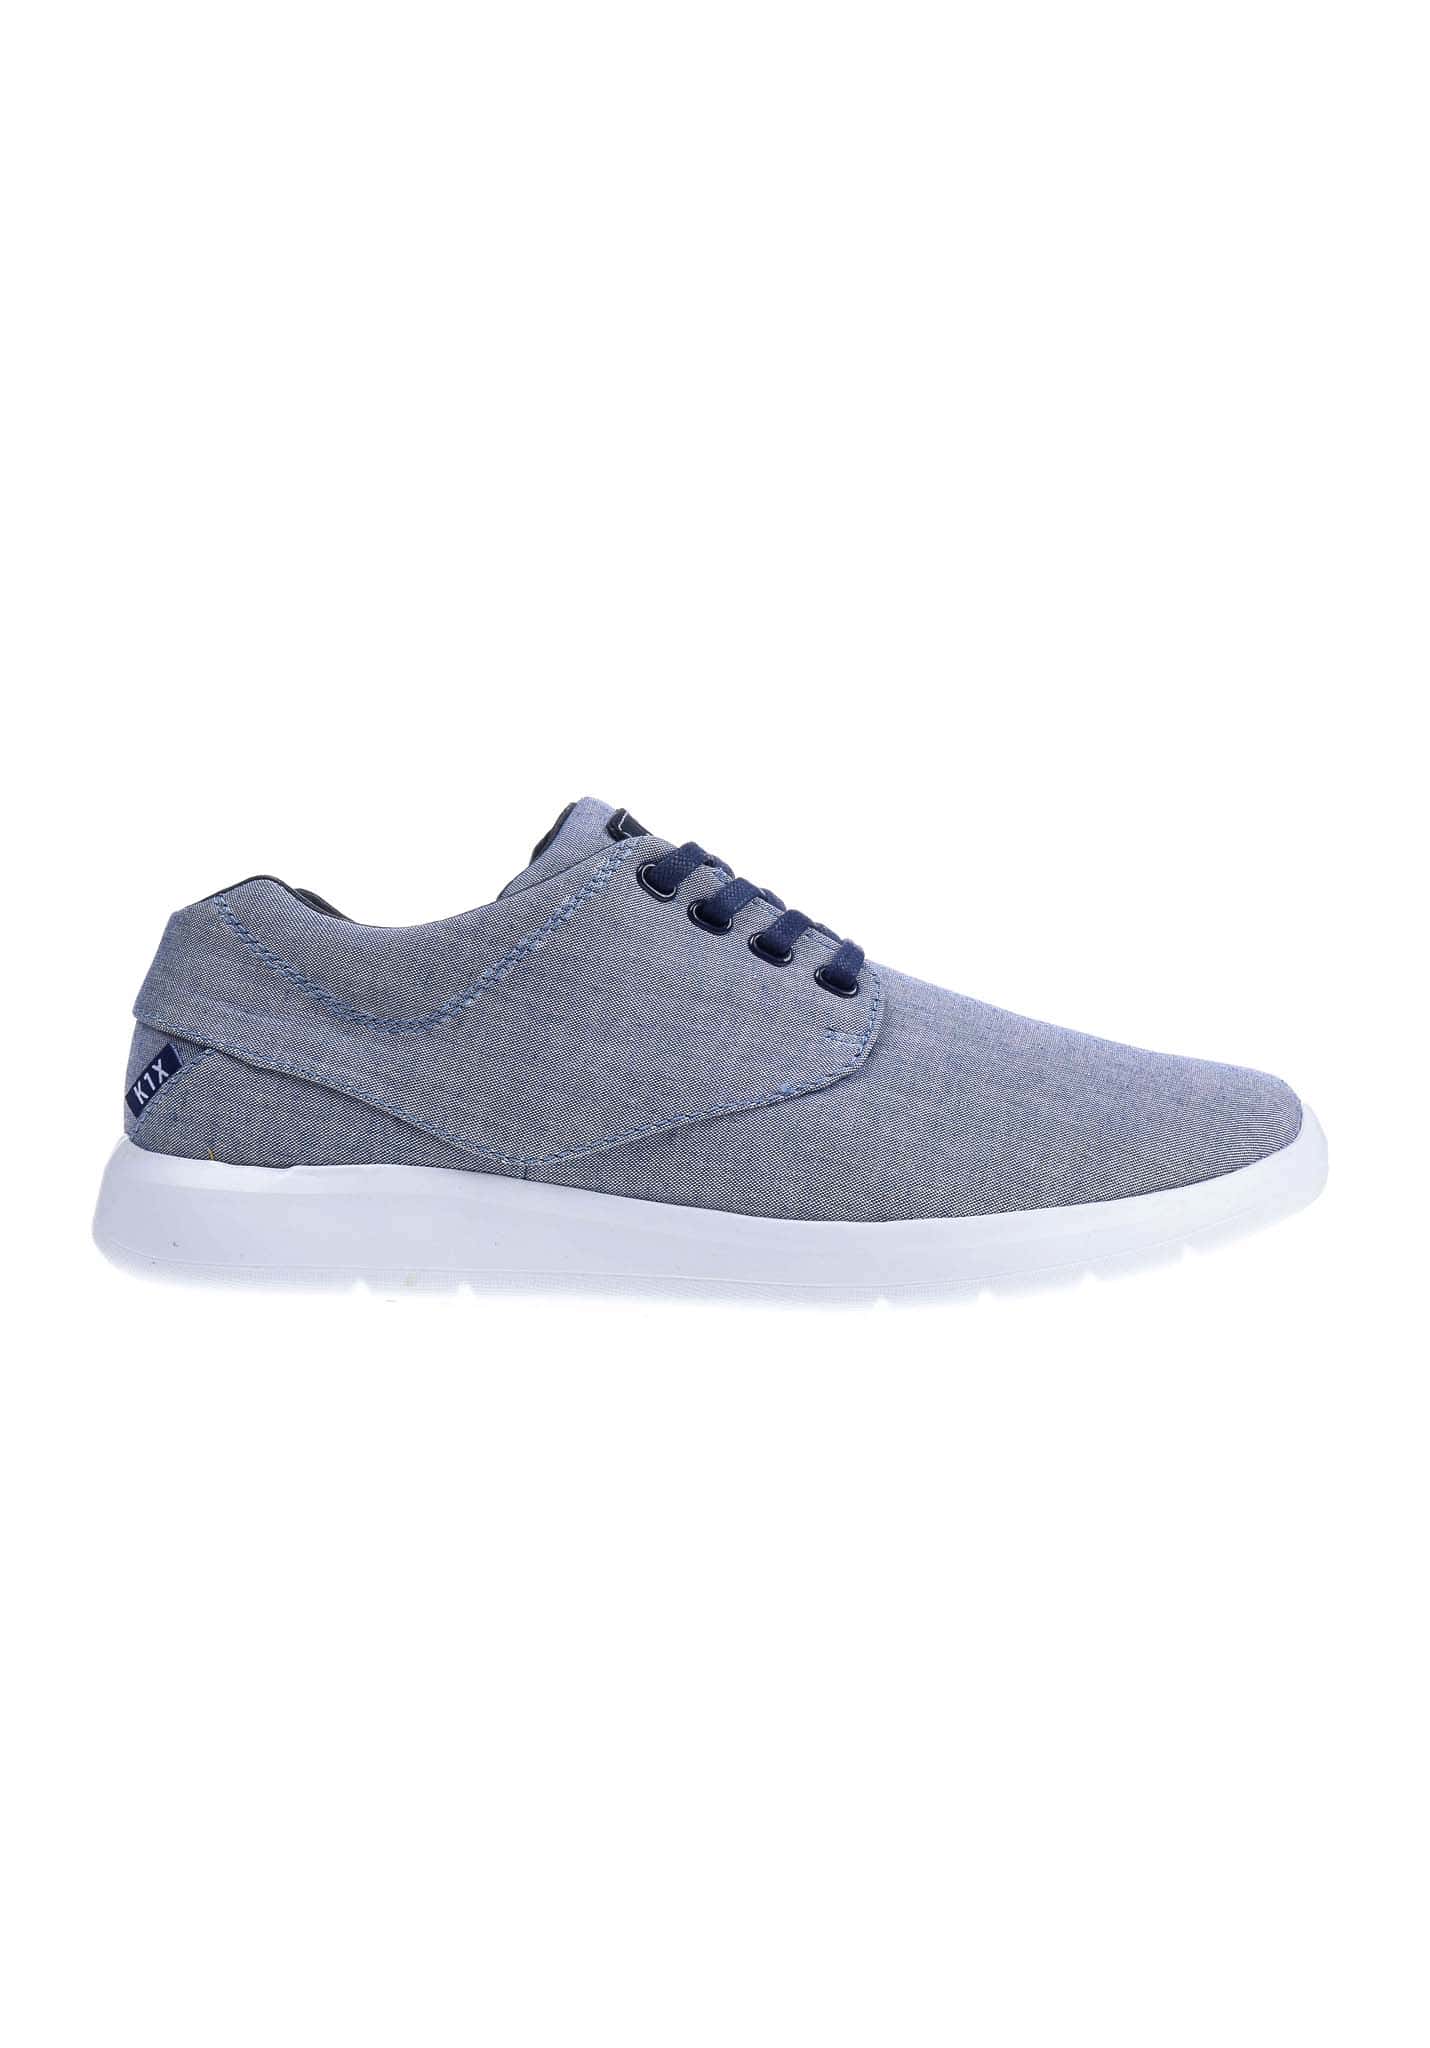 K1X Dressup Lightweight Sneaker grau/weiß 41